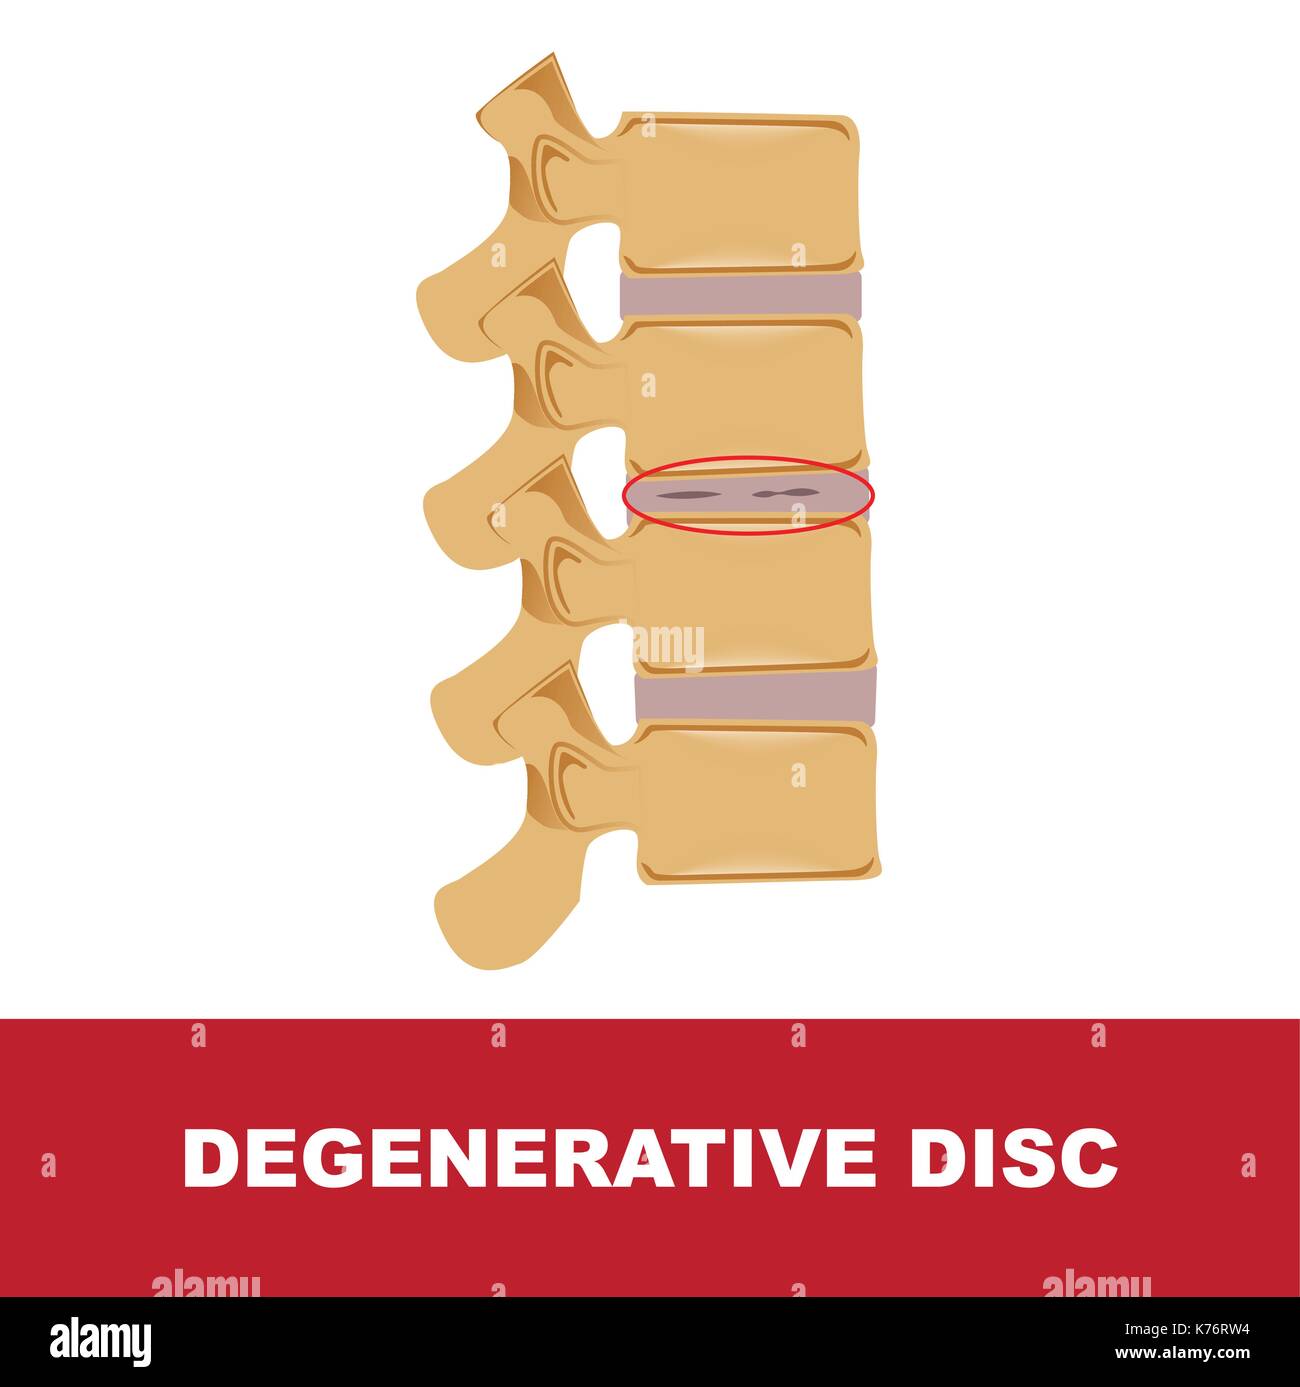 human disc degeneration. degeneration with degenerative disc Stock Vector